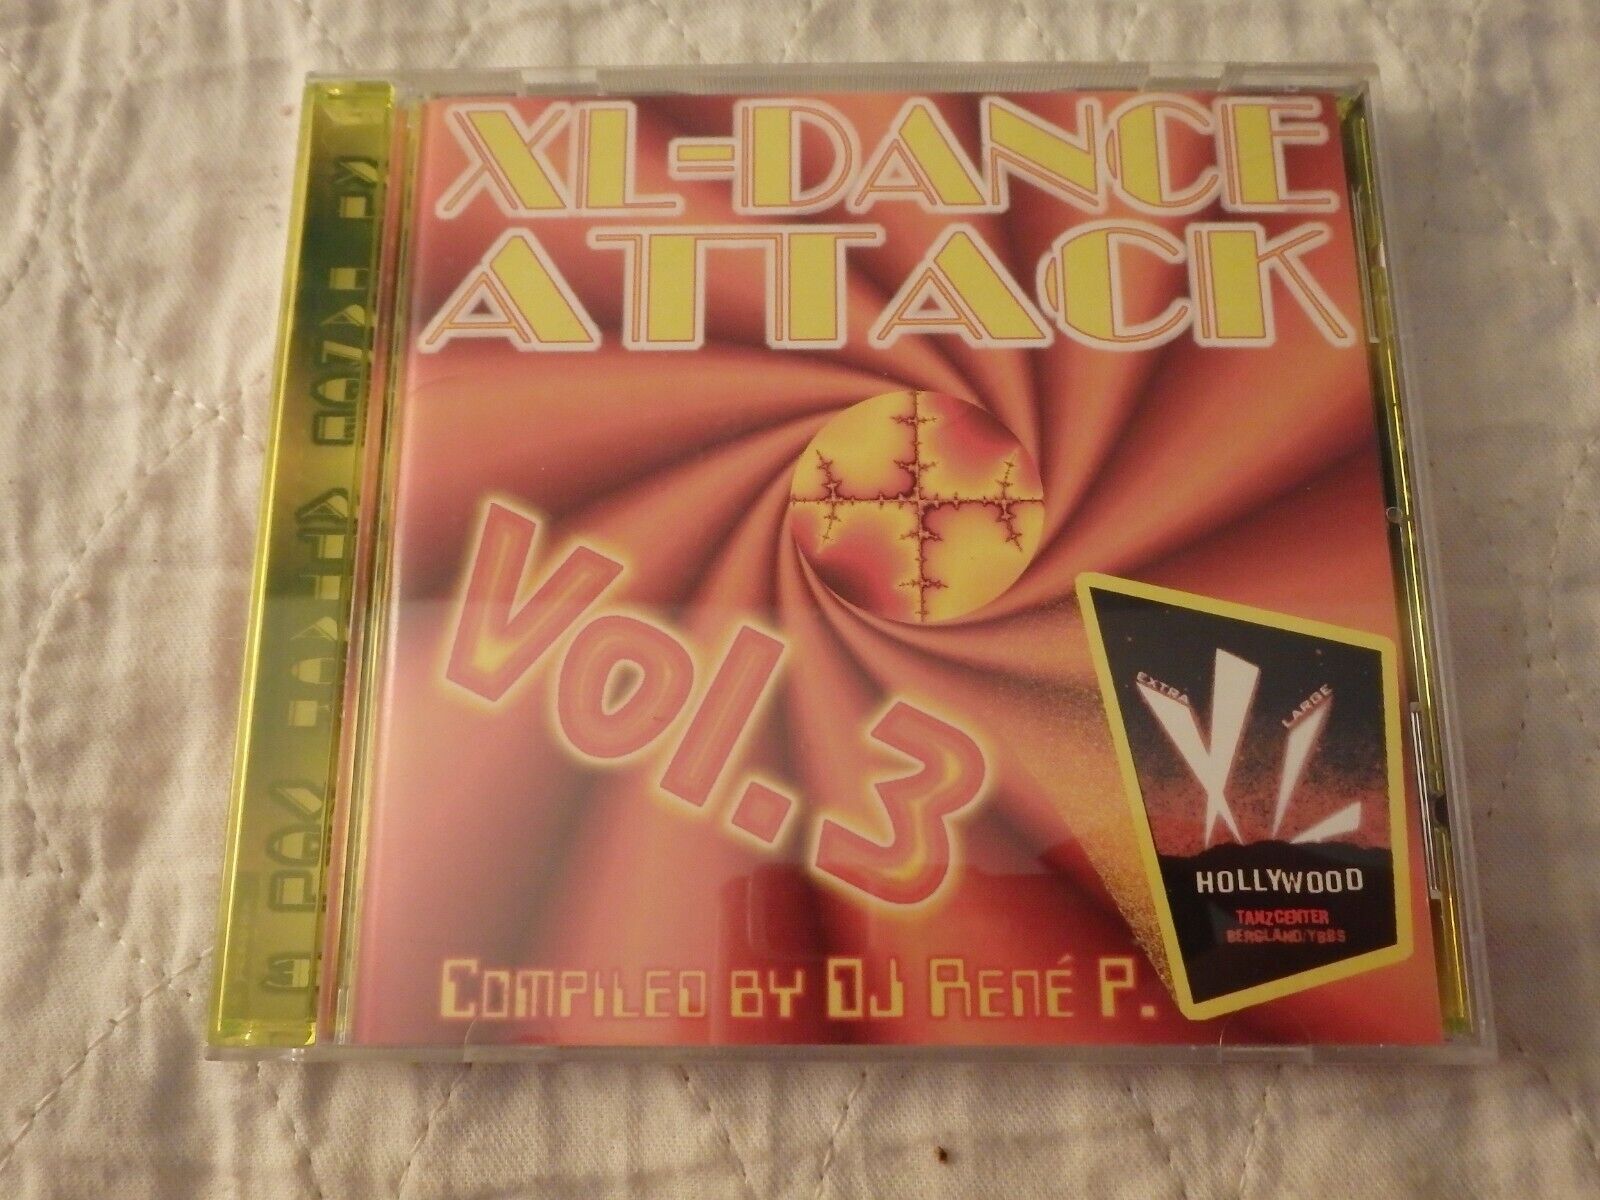 XL-Dance Attack vol.3 (CD sampler, 1998)  COMPILED BY DJ RENE P-COLUMBIA